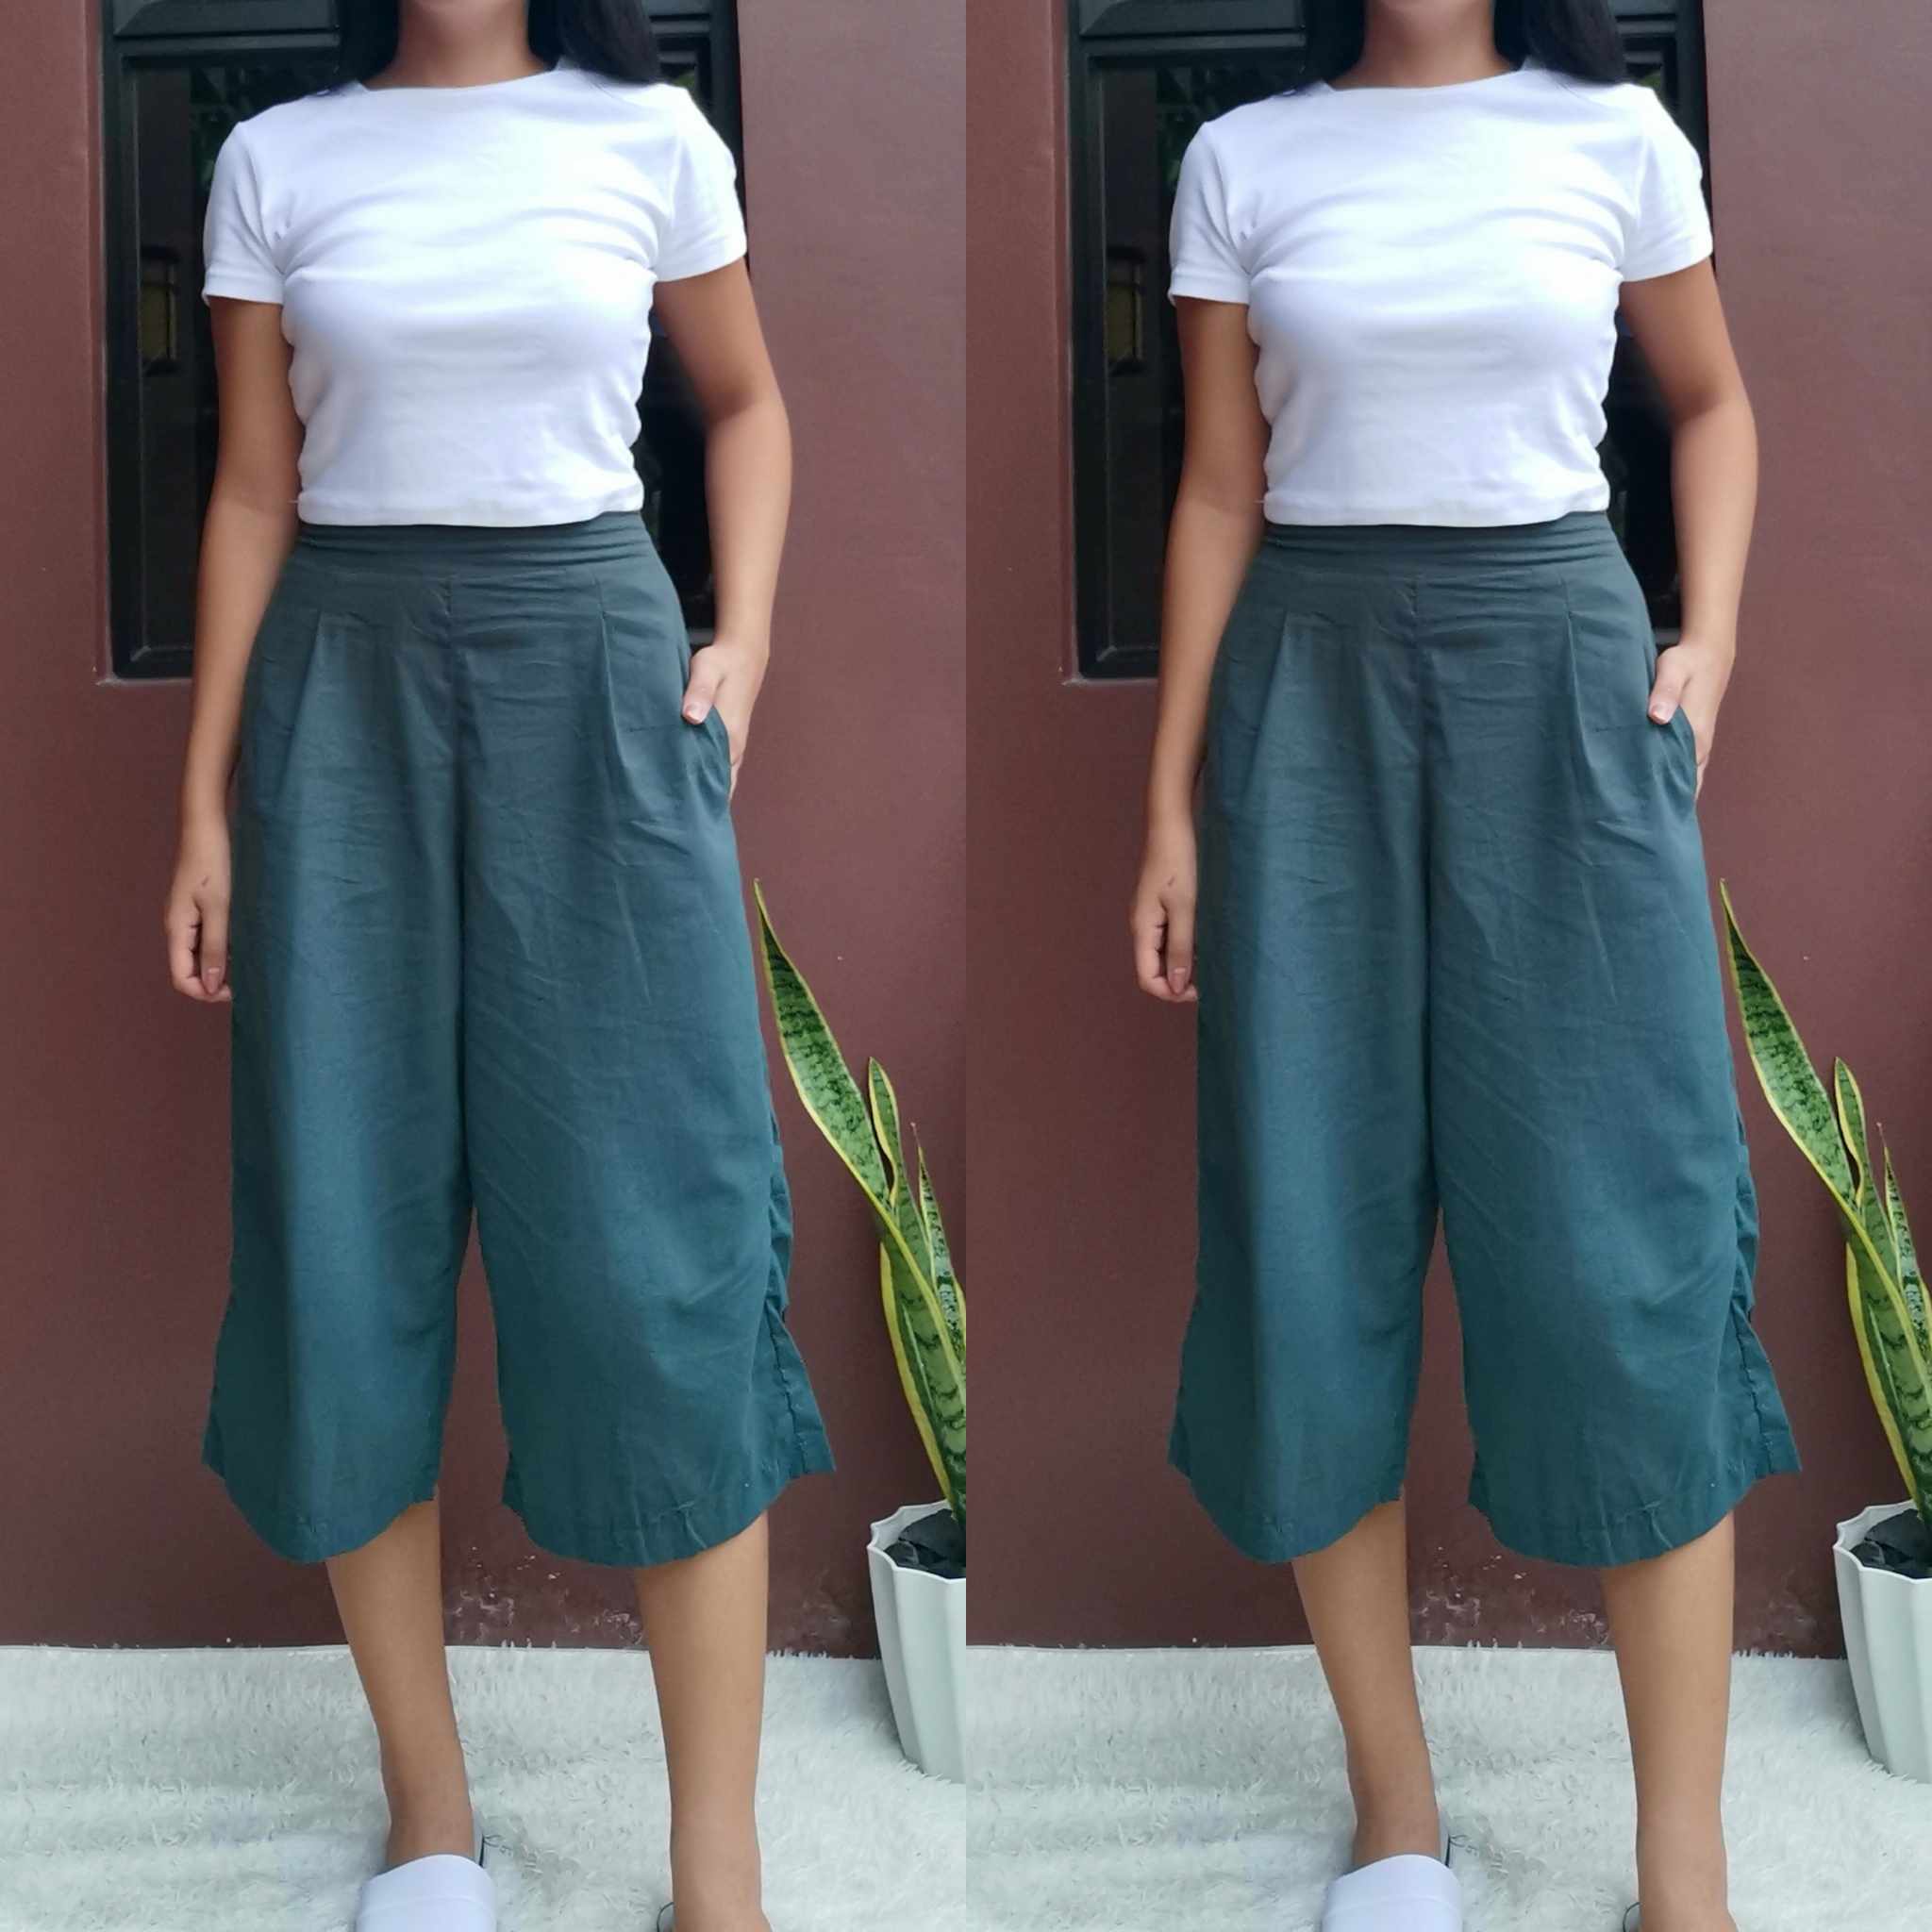 GATclothing - Tukong/Pedal pants - Cotton Linen - High quality fabric